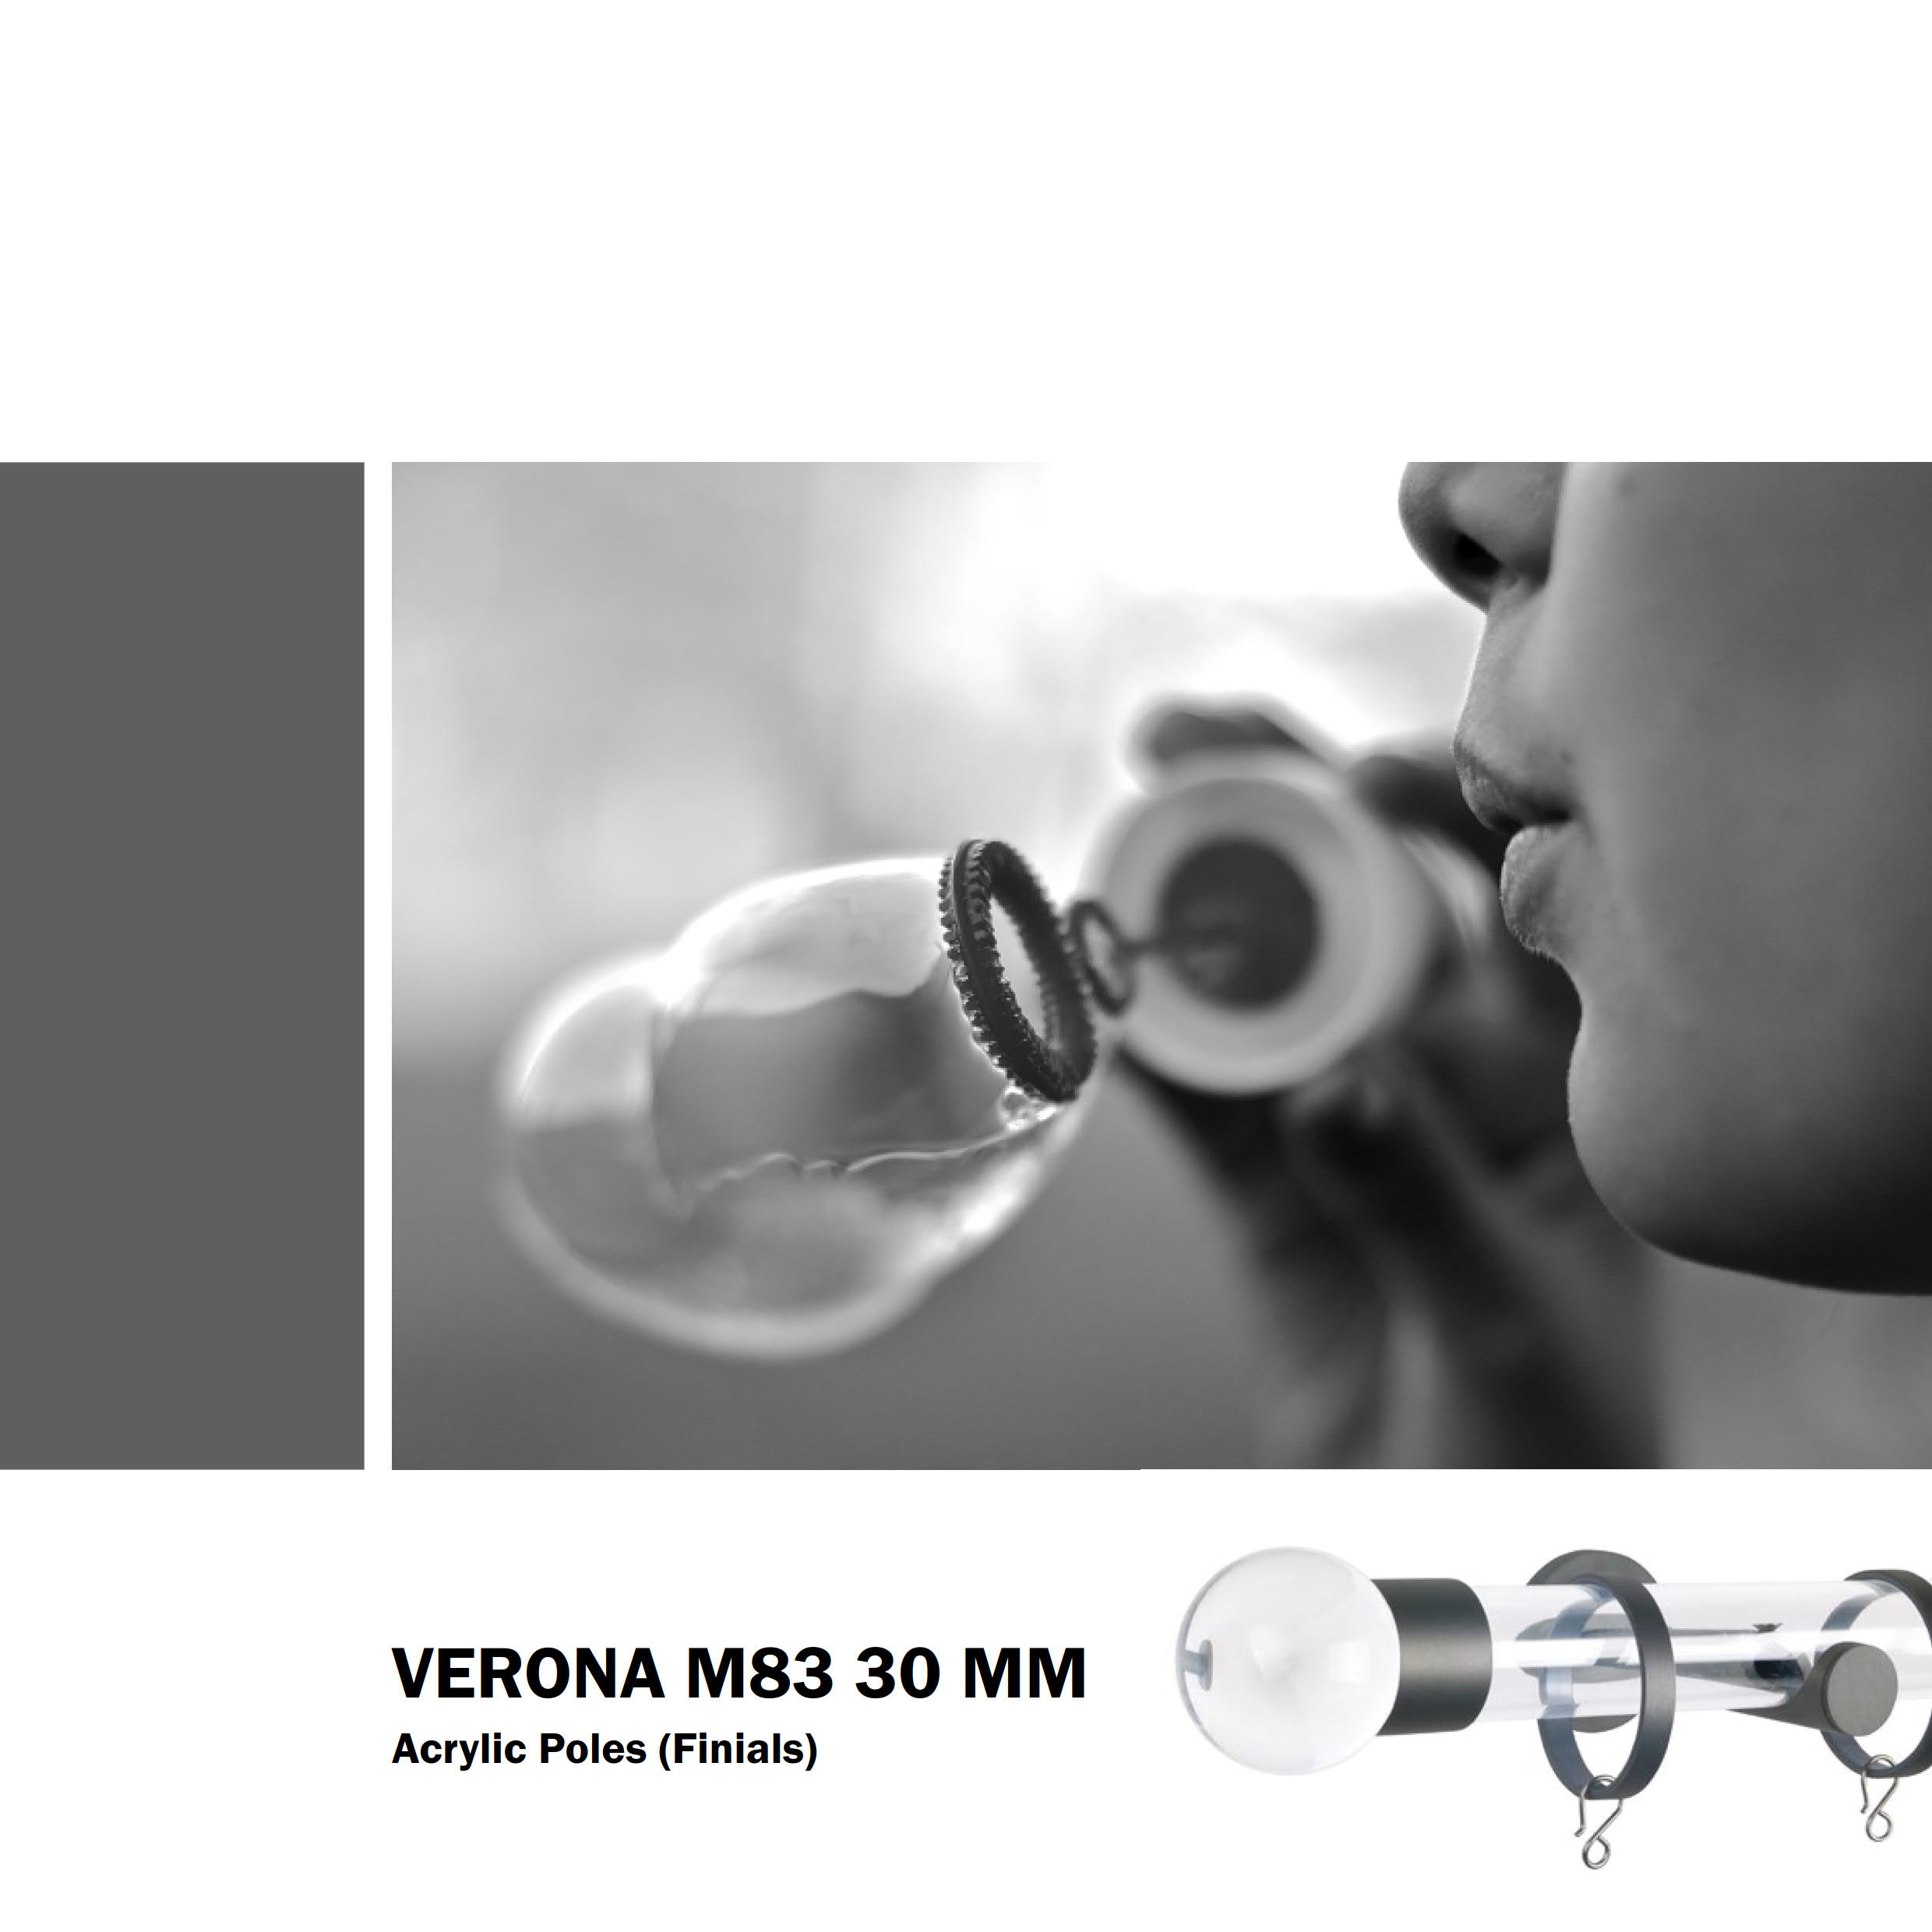 Verona m83 30 mm